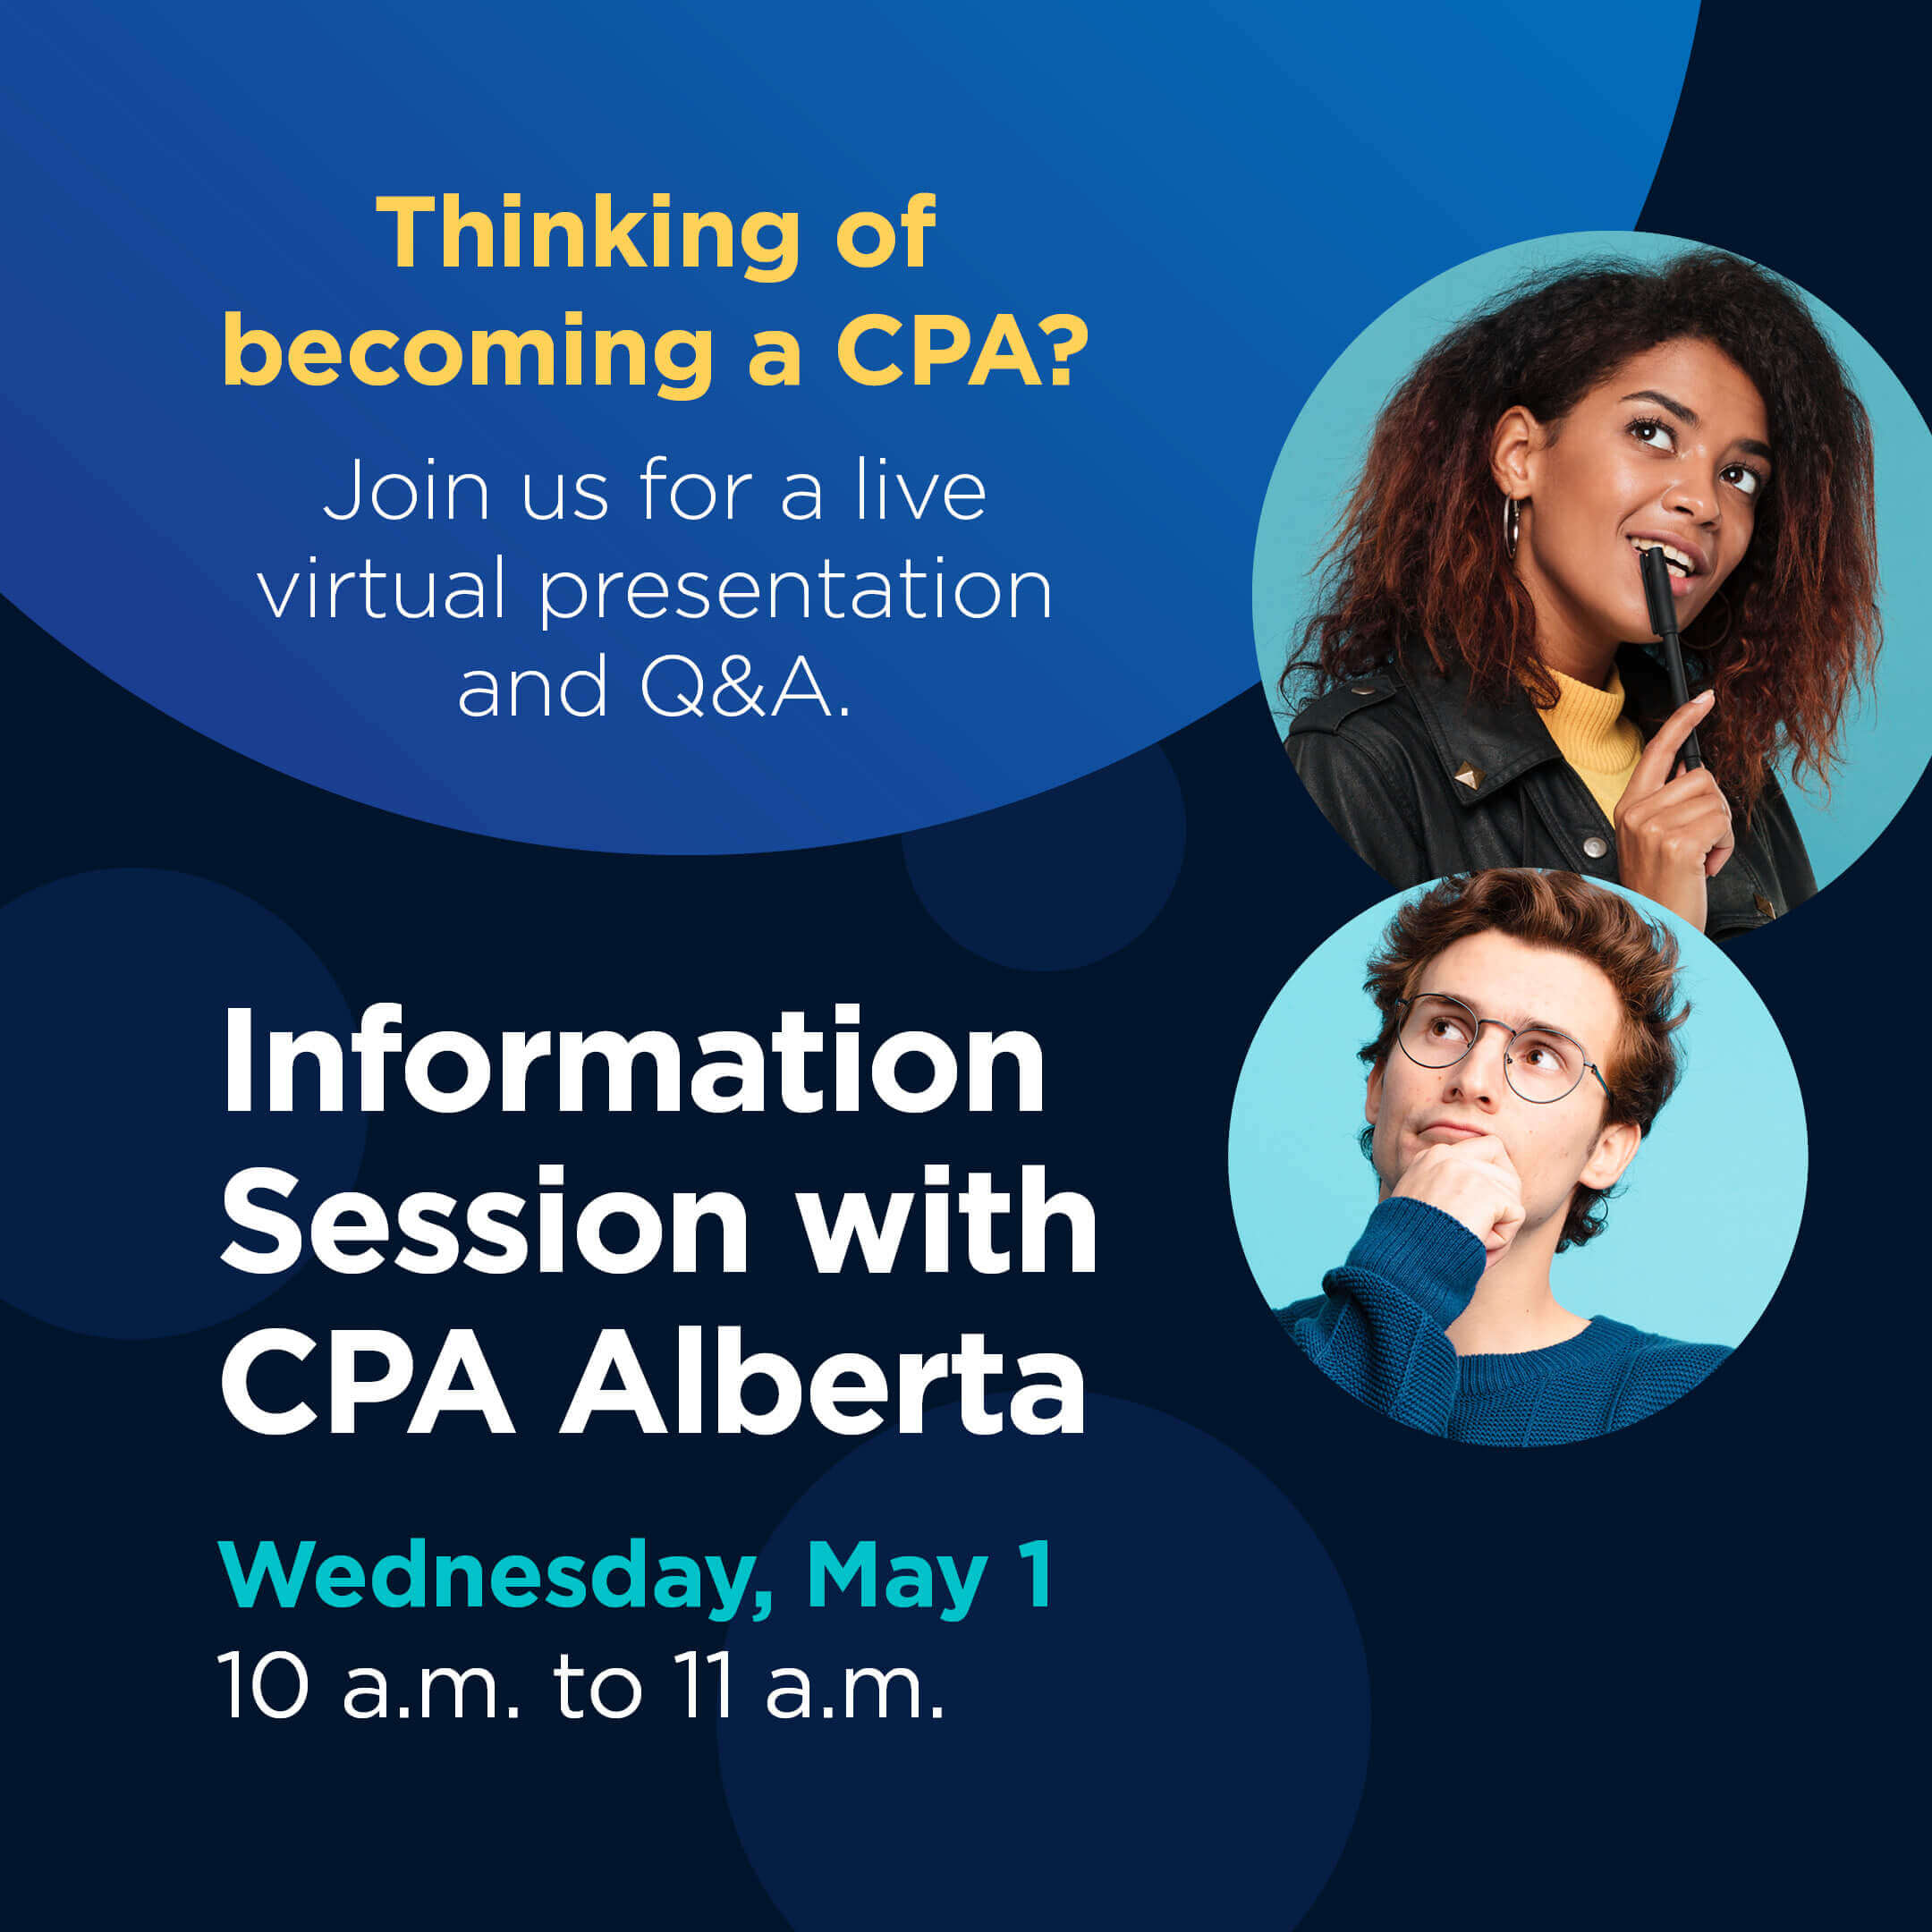 CPA Alberta Information Session